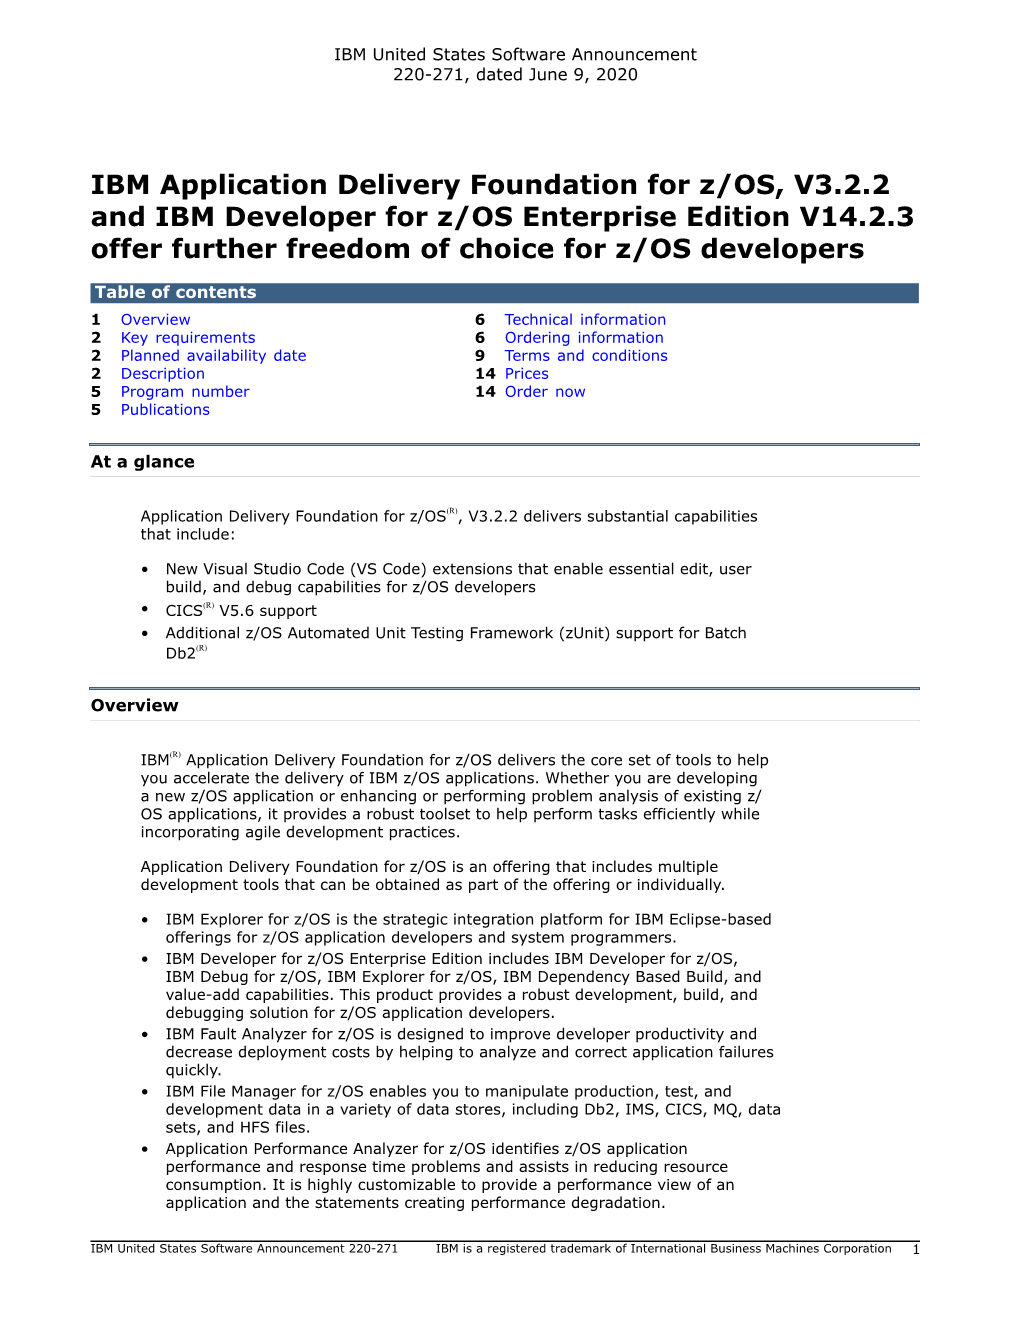 IBM Application Delivery Foundation for Z/OS, V3.2.2 and IBM Developer for Z/OS Enterprise Edition V14.2.3 Offer Further Freedom of Choice for Z/OS Developers